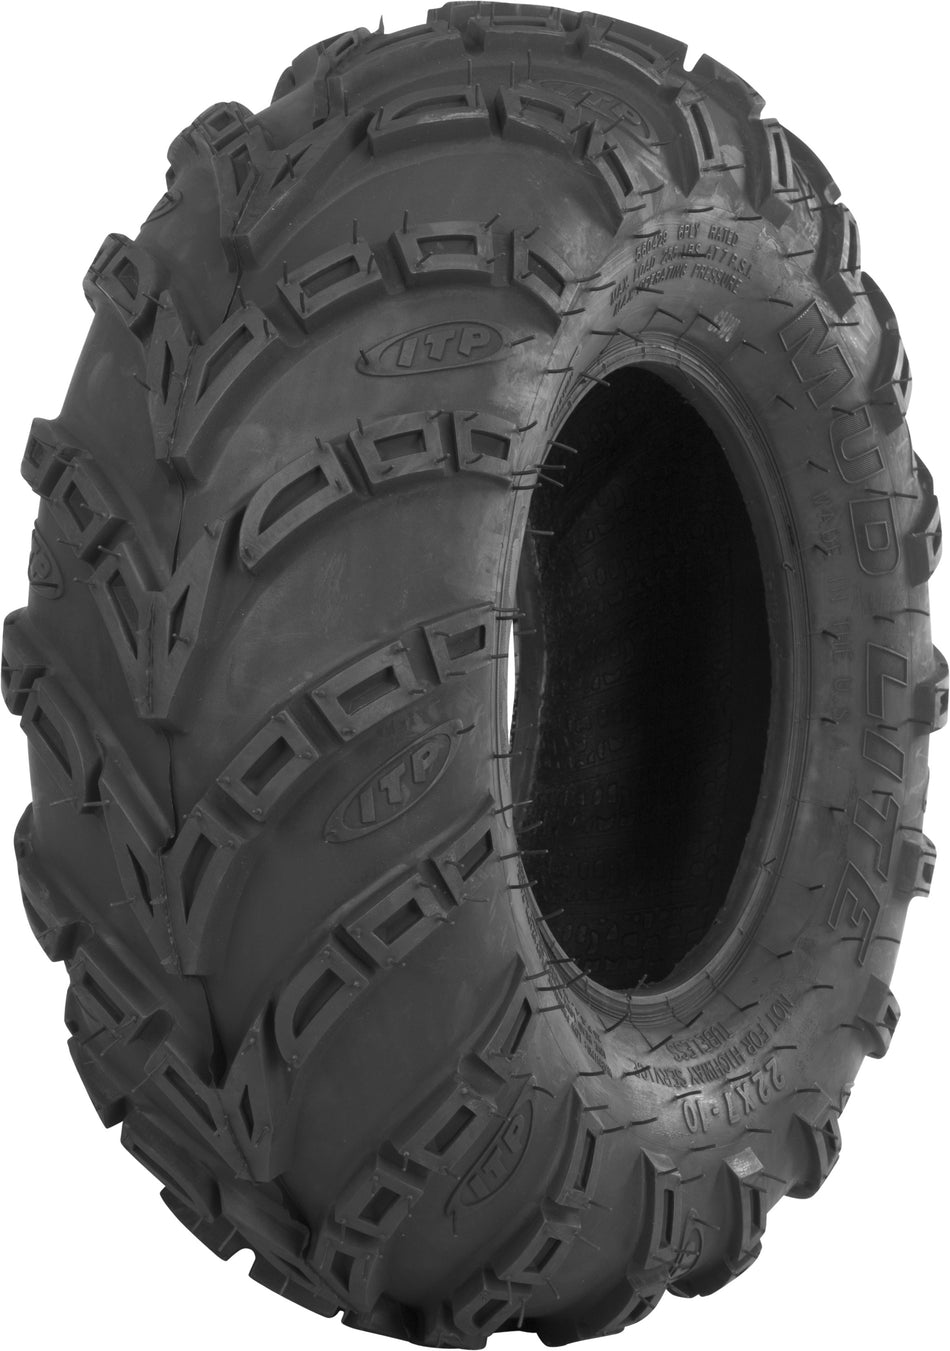 ITP Tire Mud Lite Xl Rear 25x10-12 Lr-855lbs Bias 560364